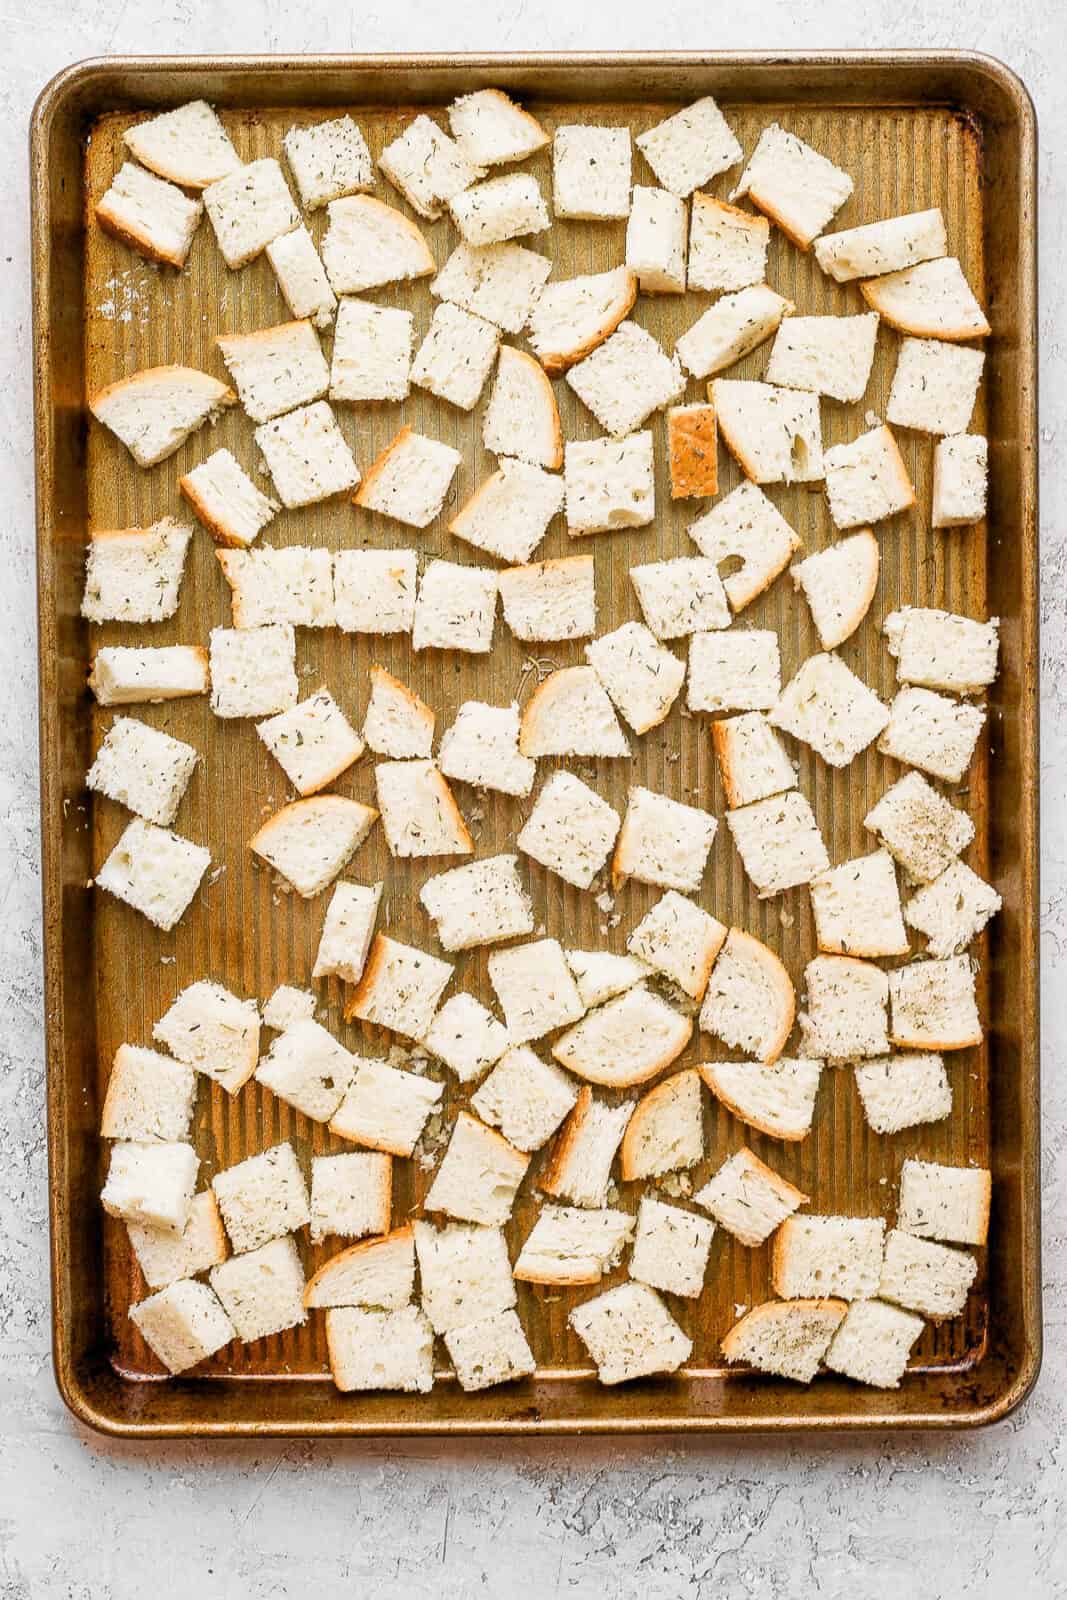 Seasoned bread pieces on a baking sheet before baking.